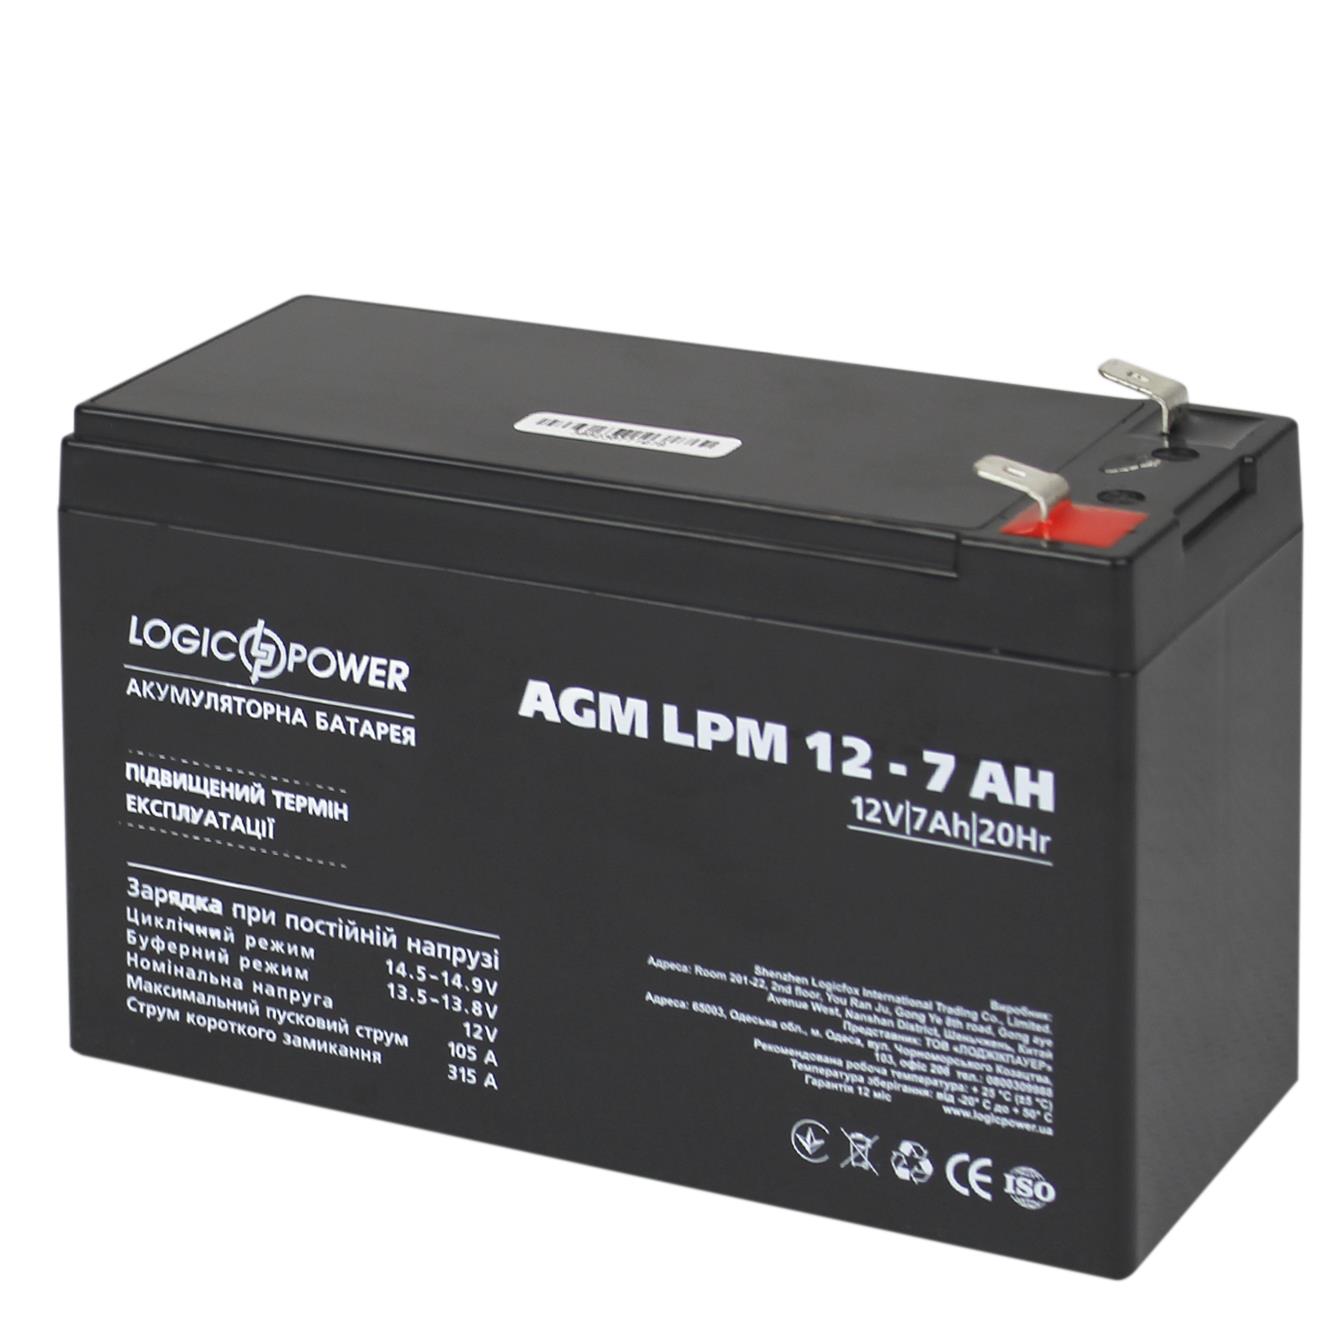 LogicPower AGM LPM 12V - 7 Ah (3862)